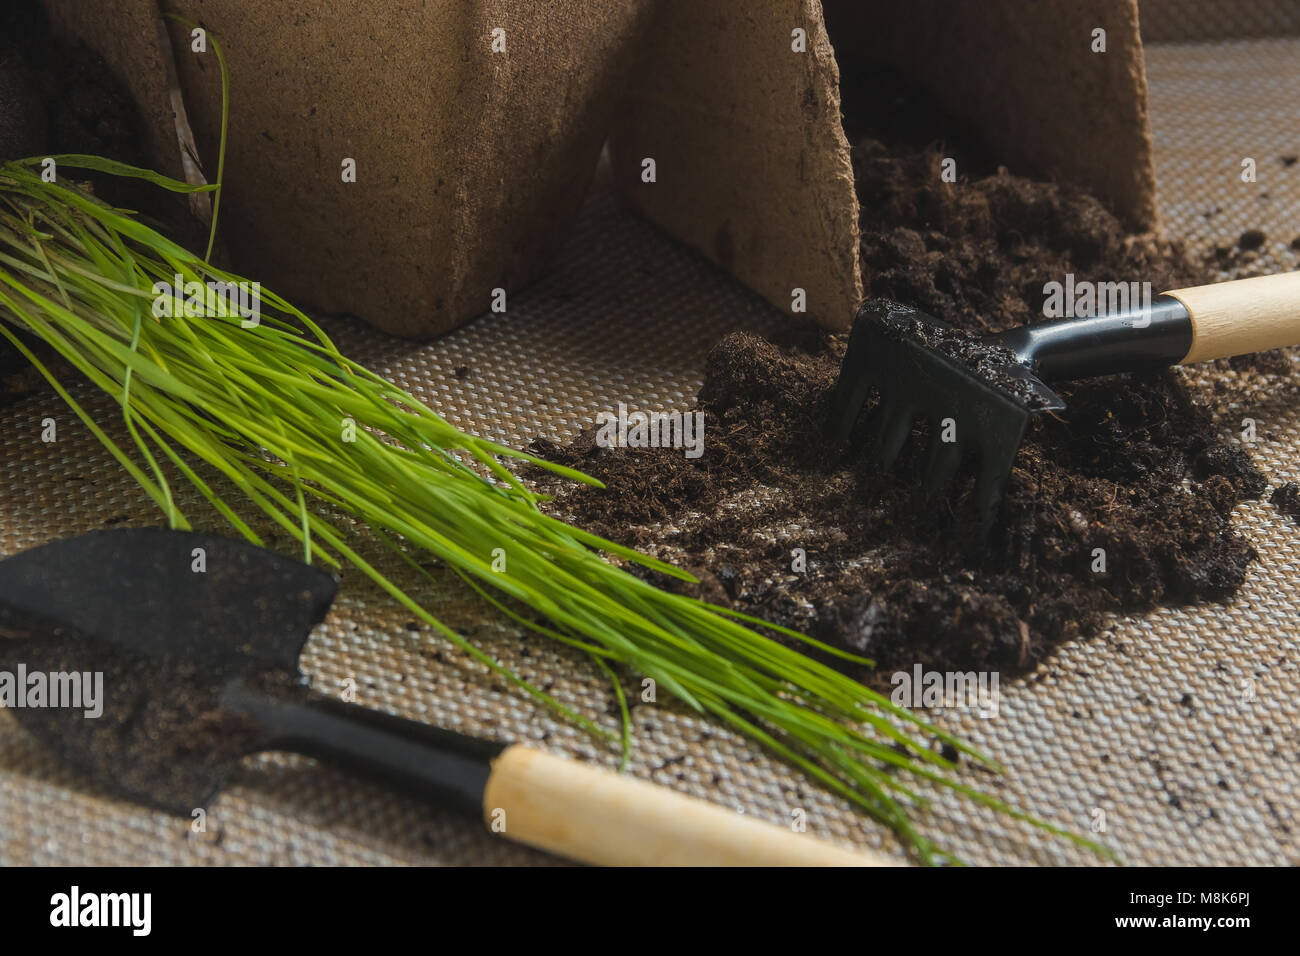 Preparing for Seasonal Transplantation of Plant, Ingardening. Product Still Life Image. Planting in Garden Concept. Stock Photo